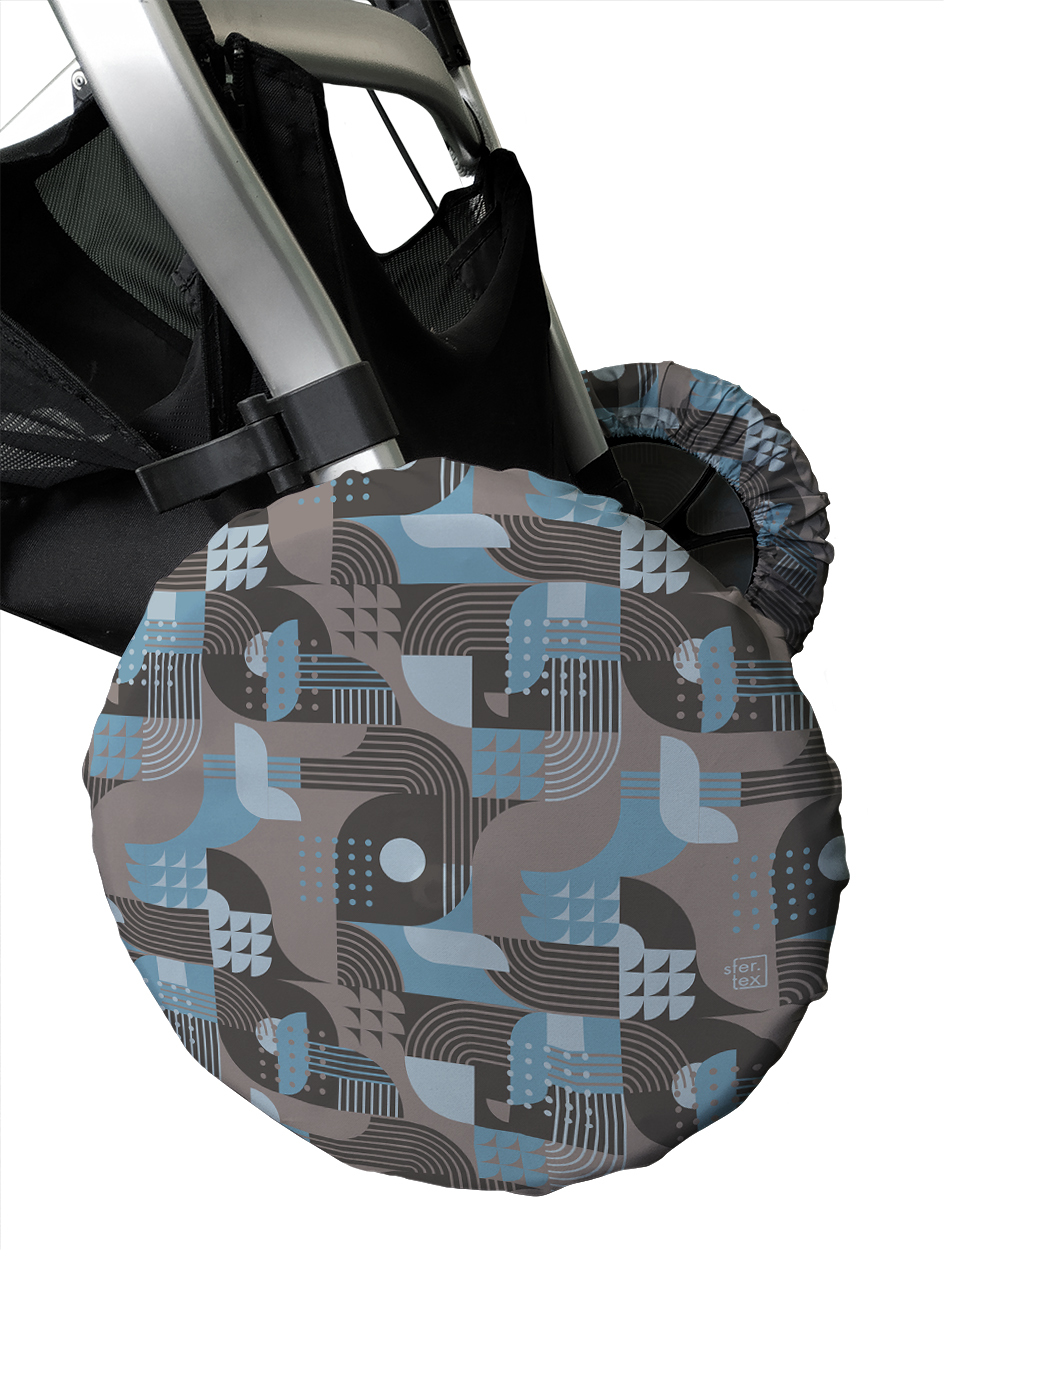 фото Чехлы на колеса коляски sfer.tex геометрический дизайн 32 см, 4 шт